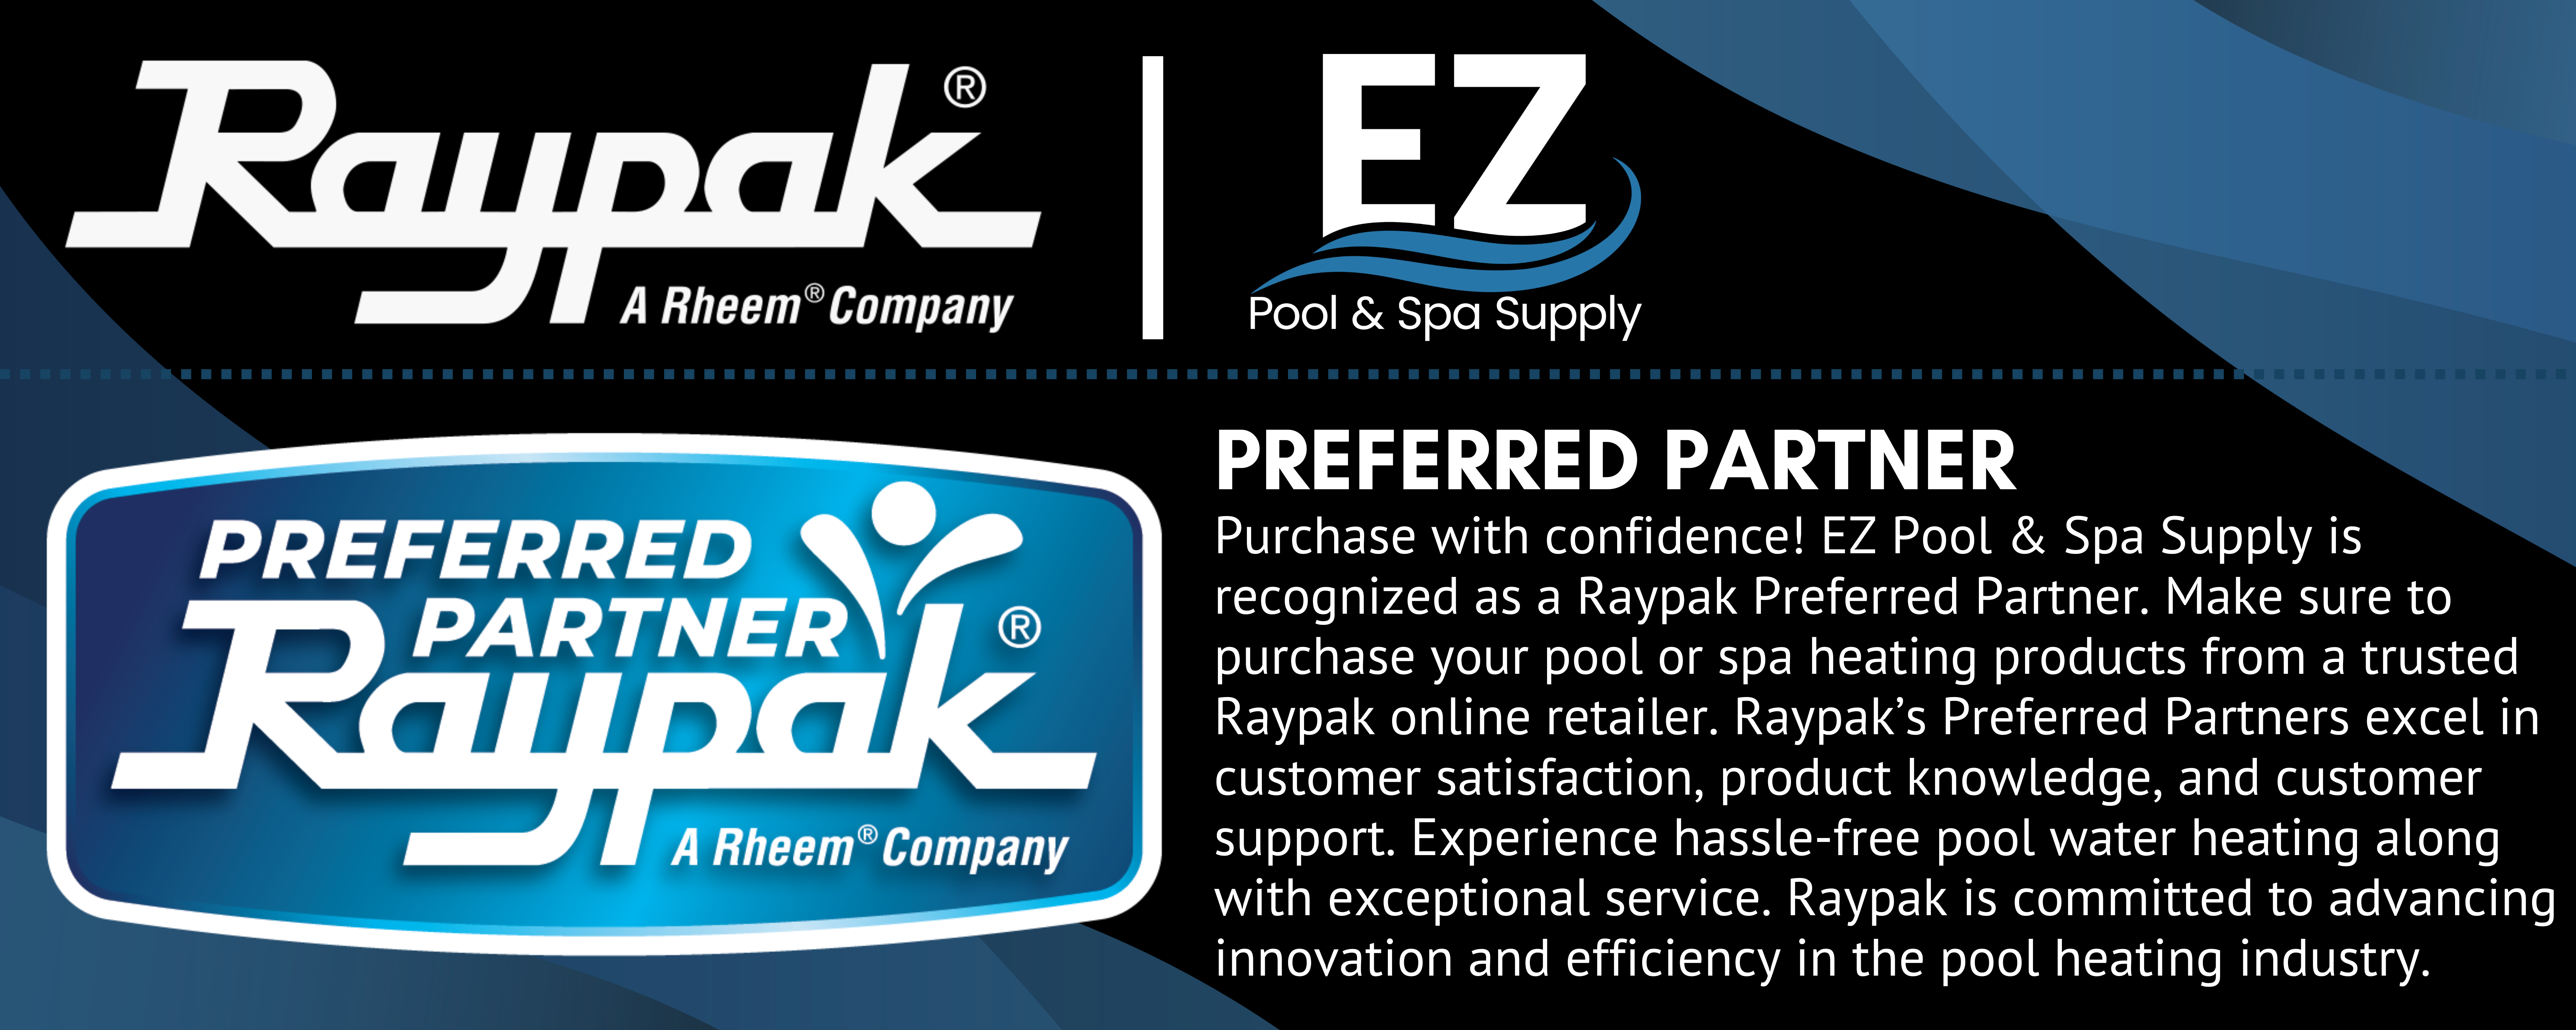 EZ Pool & Spa Supply - Raypak Preferred Partner